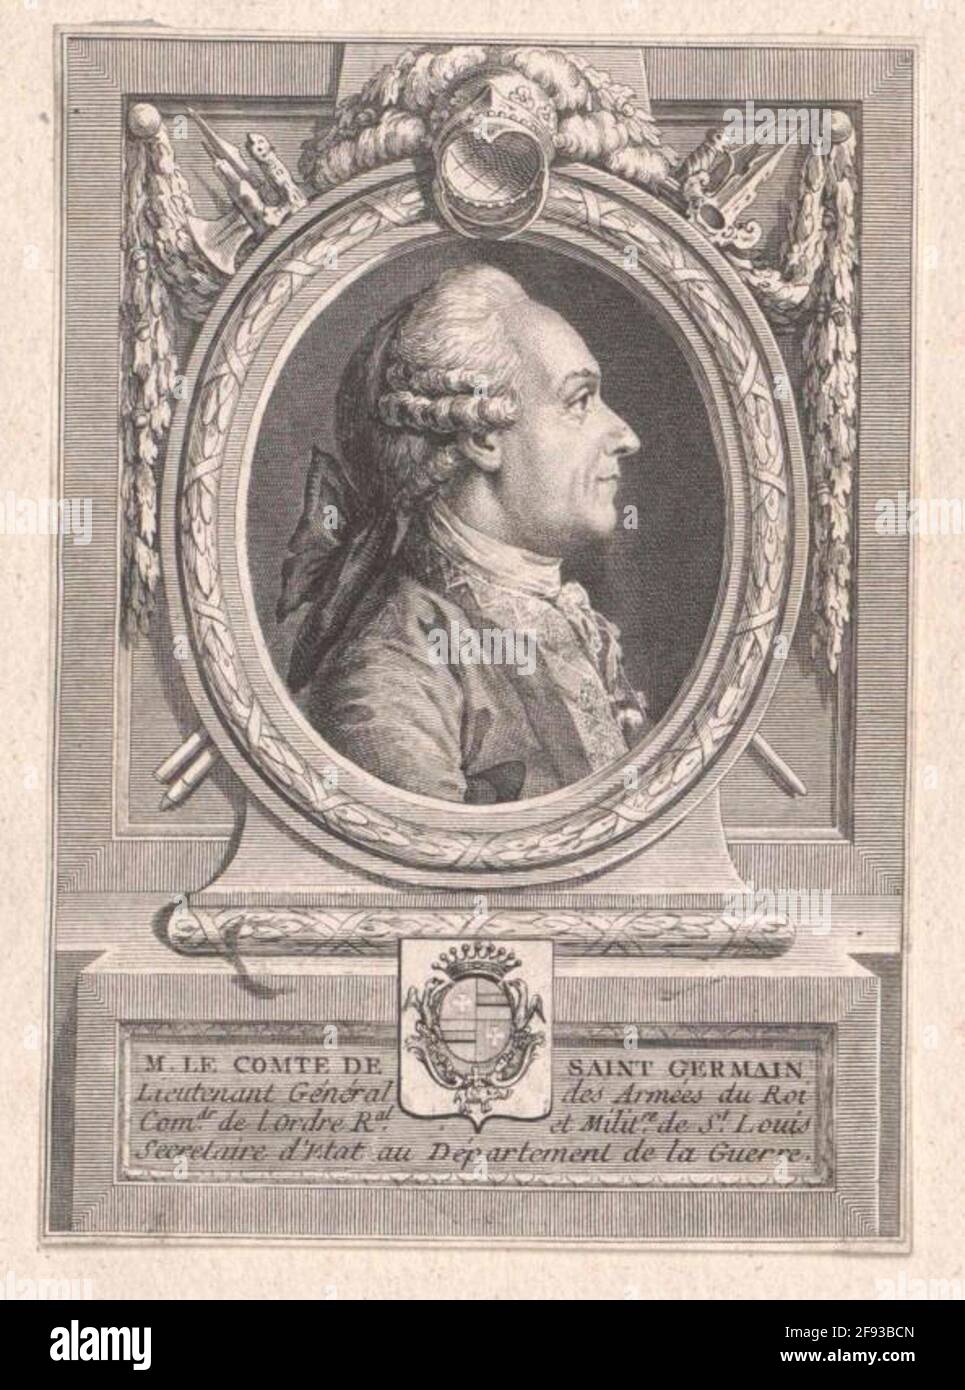 Claude Louis, Comte de Saint-Germain - Wikipedia